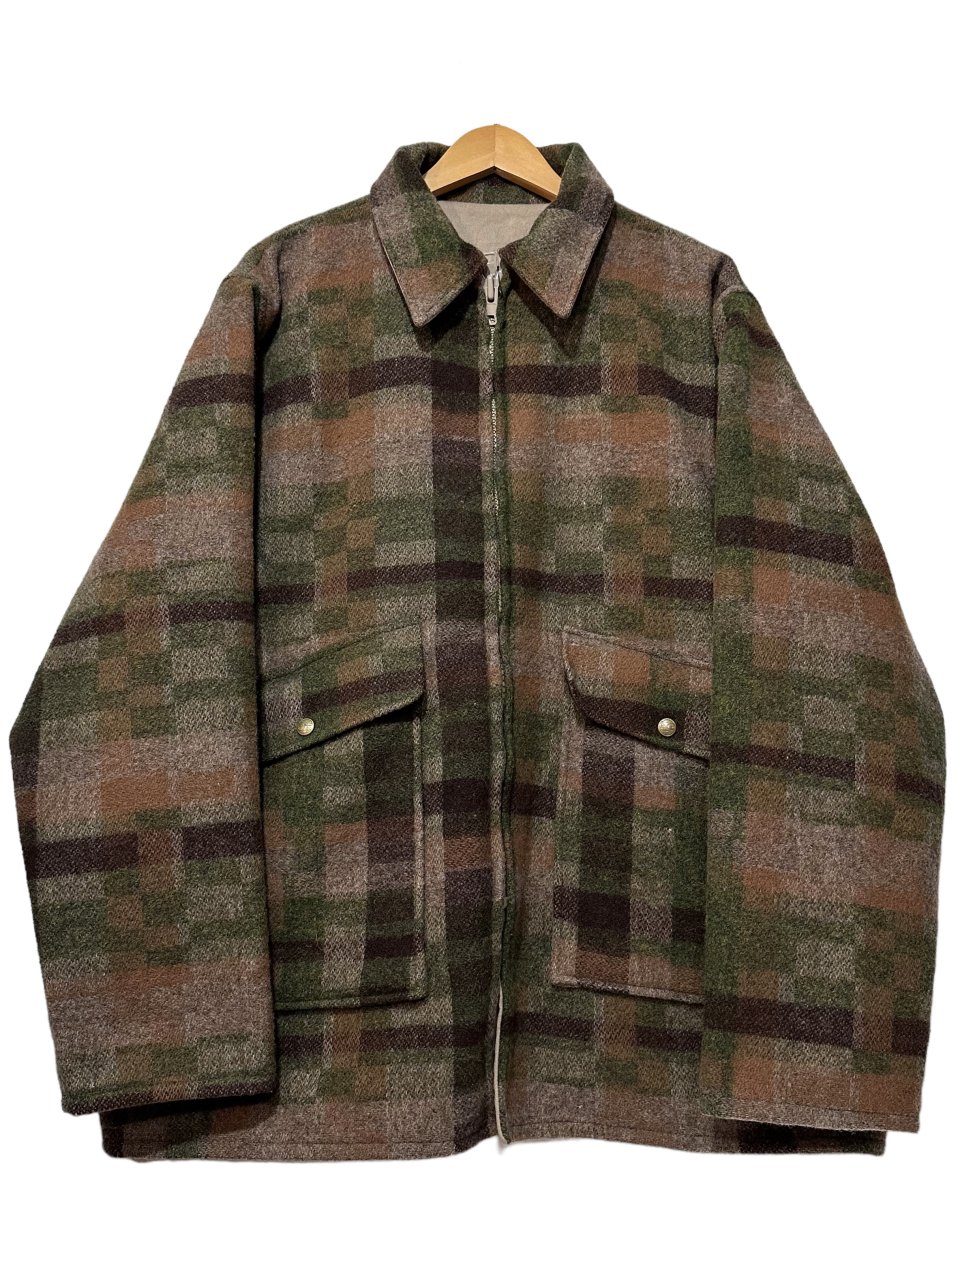 USA製 s L.L.Bean Reversible Wool Hunting Jacket オリーブ カーキ